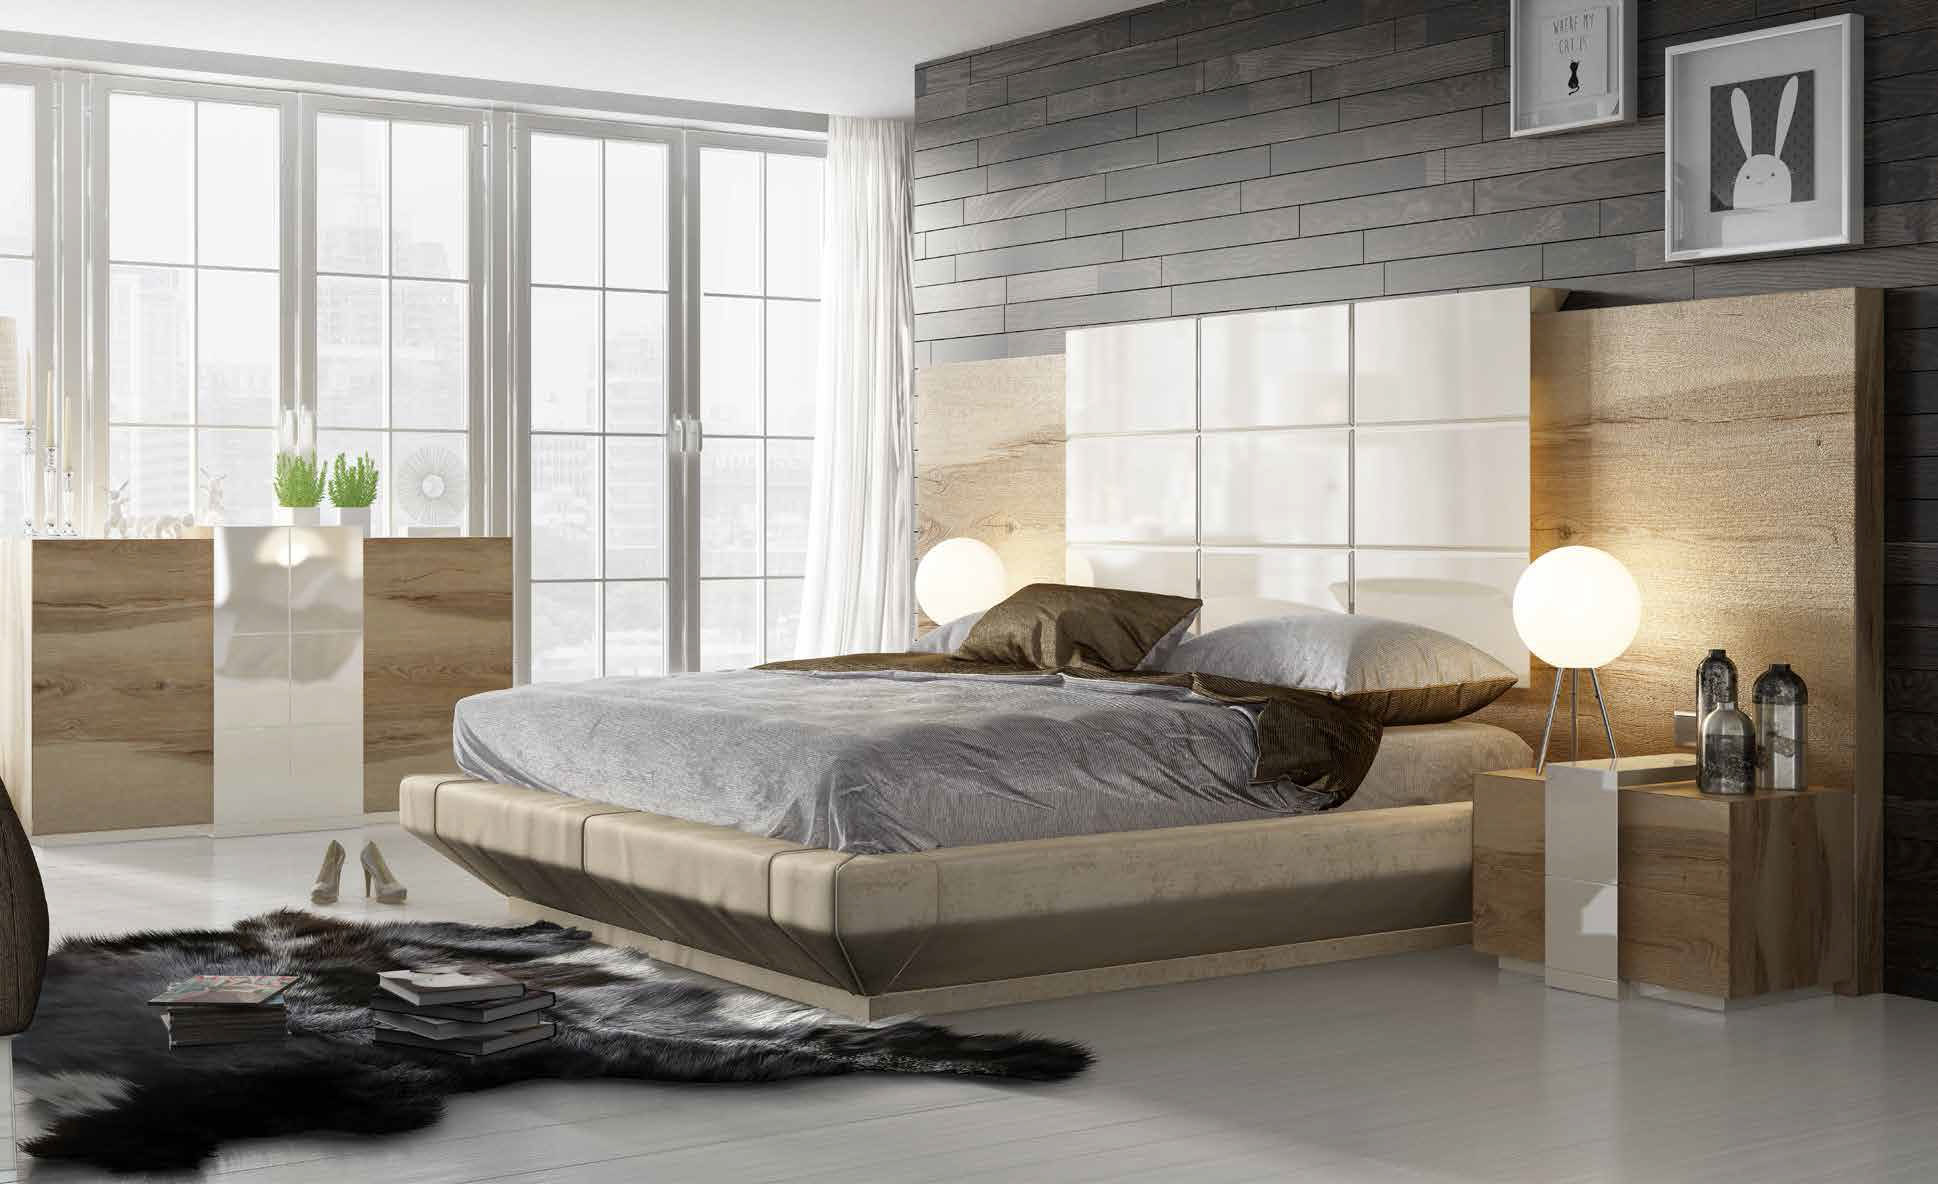 Brands Franco Furniture Bedrooms vol2, Spain DOR 04